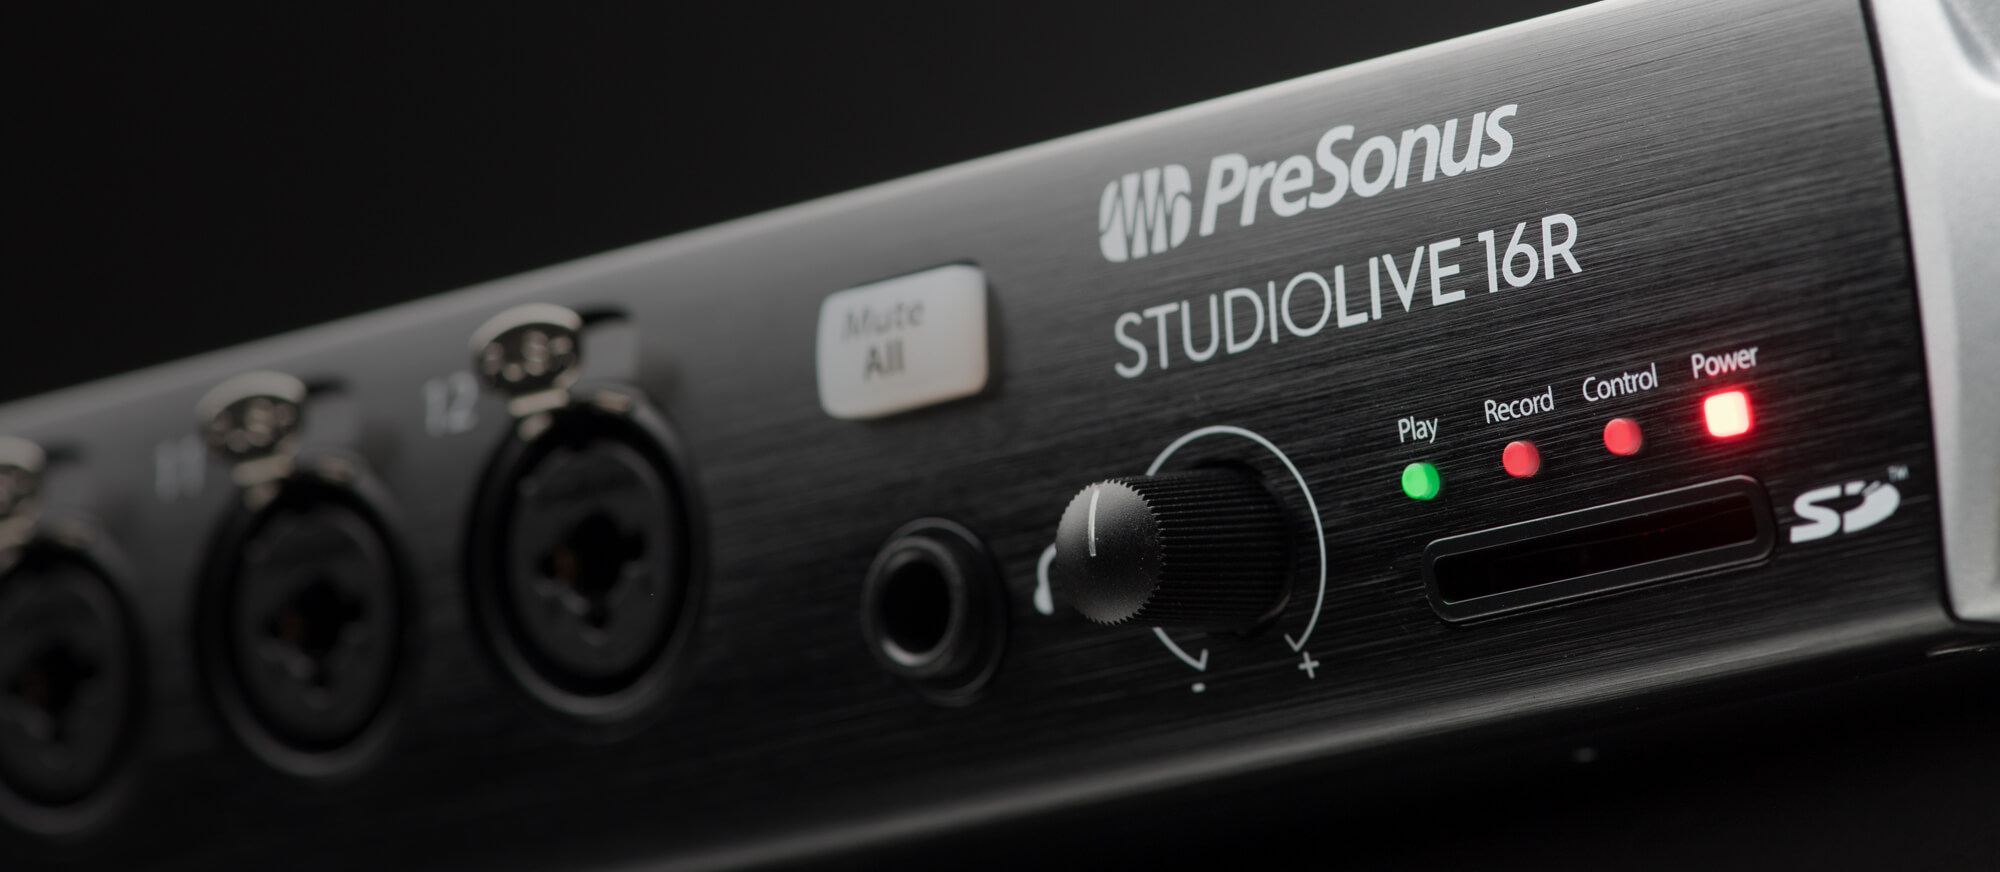 Presonus Studiolive-16r - Digital mixing desk - Variation 3